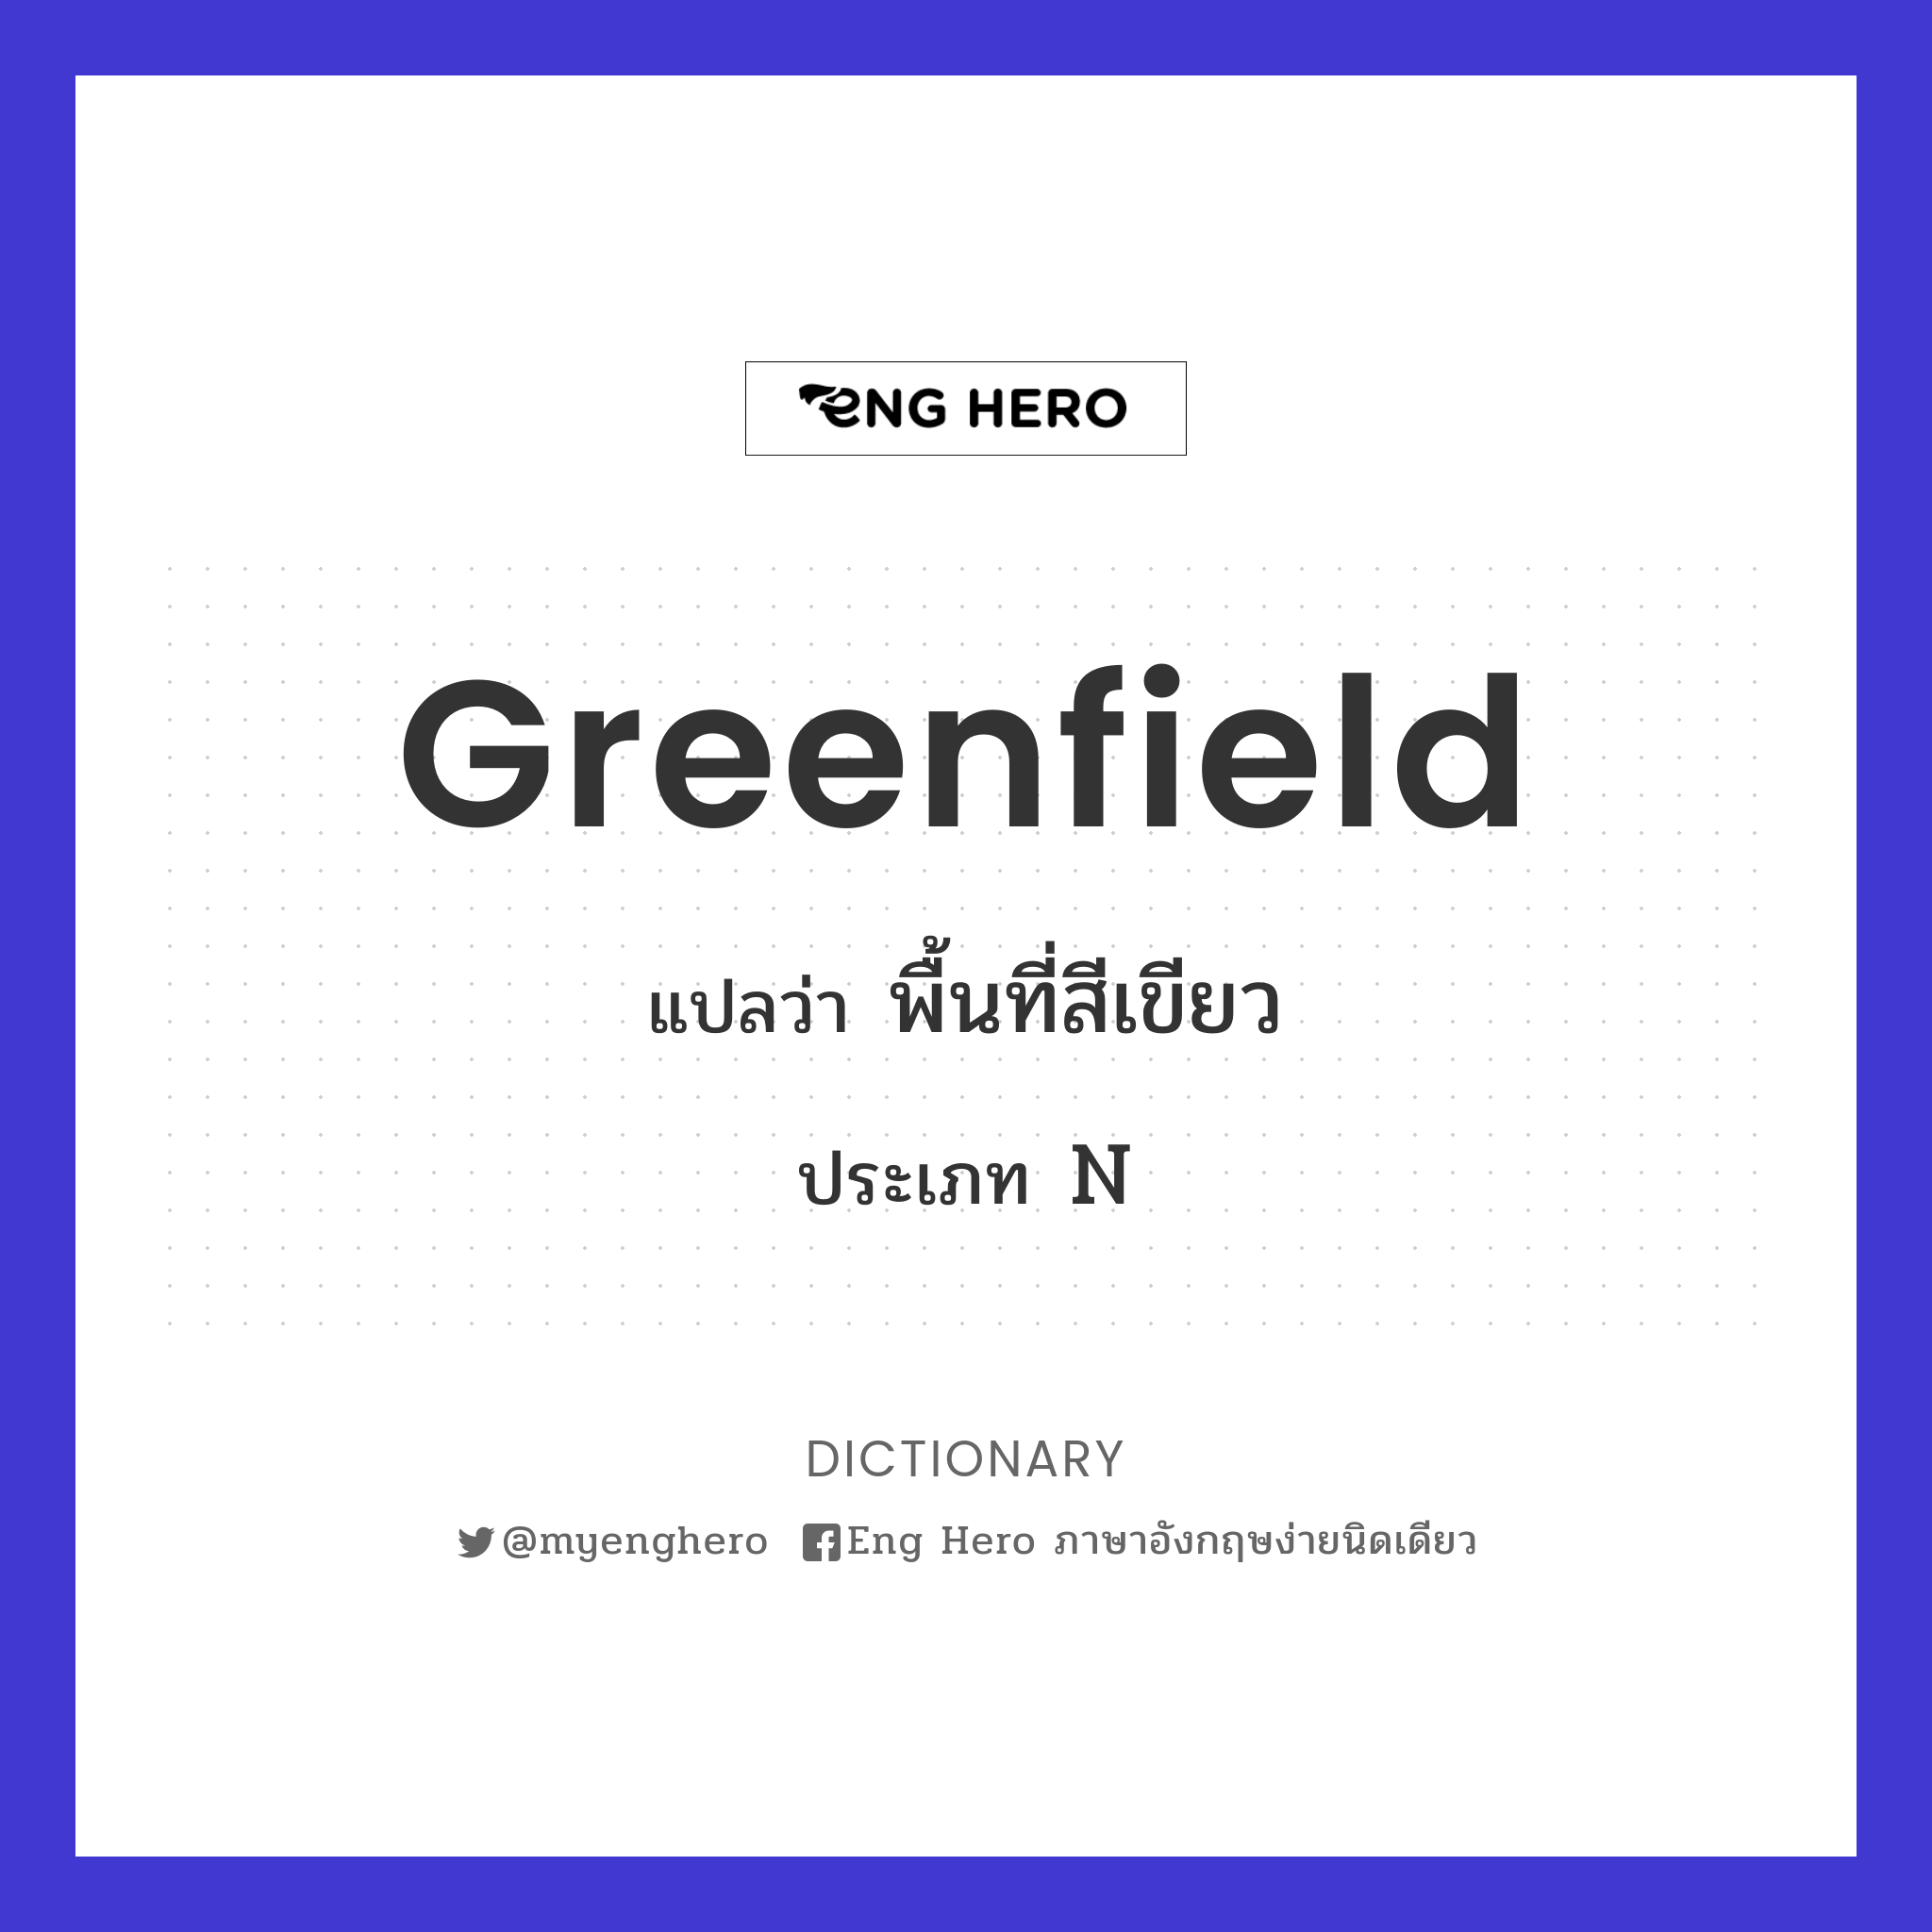 greenfield